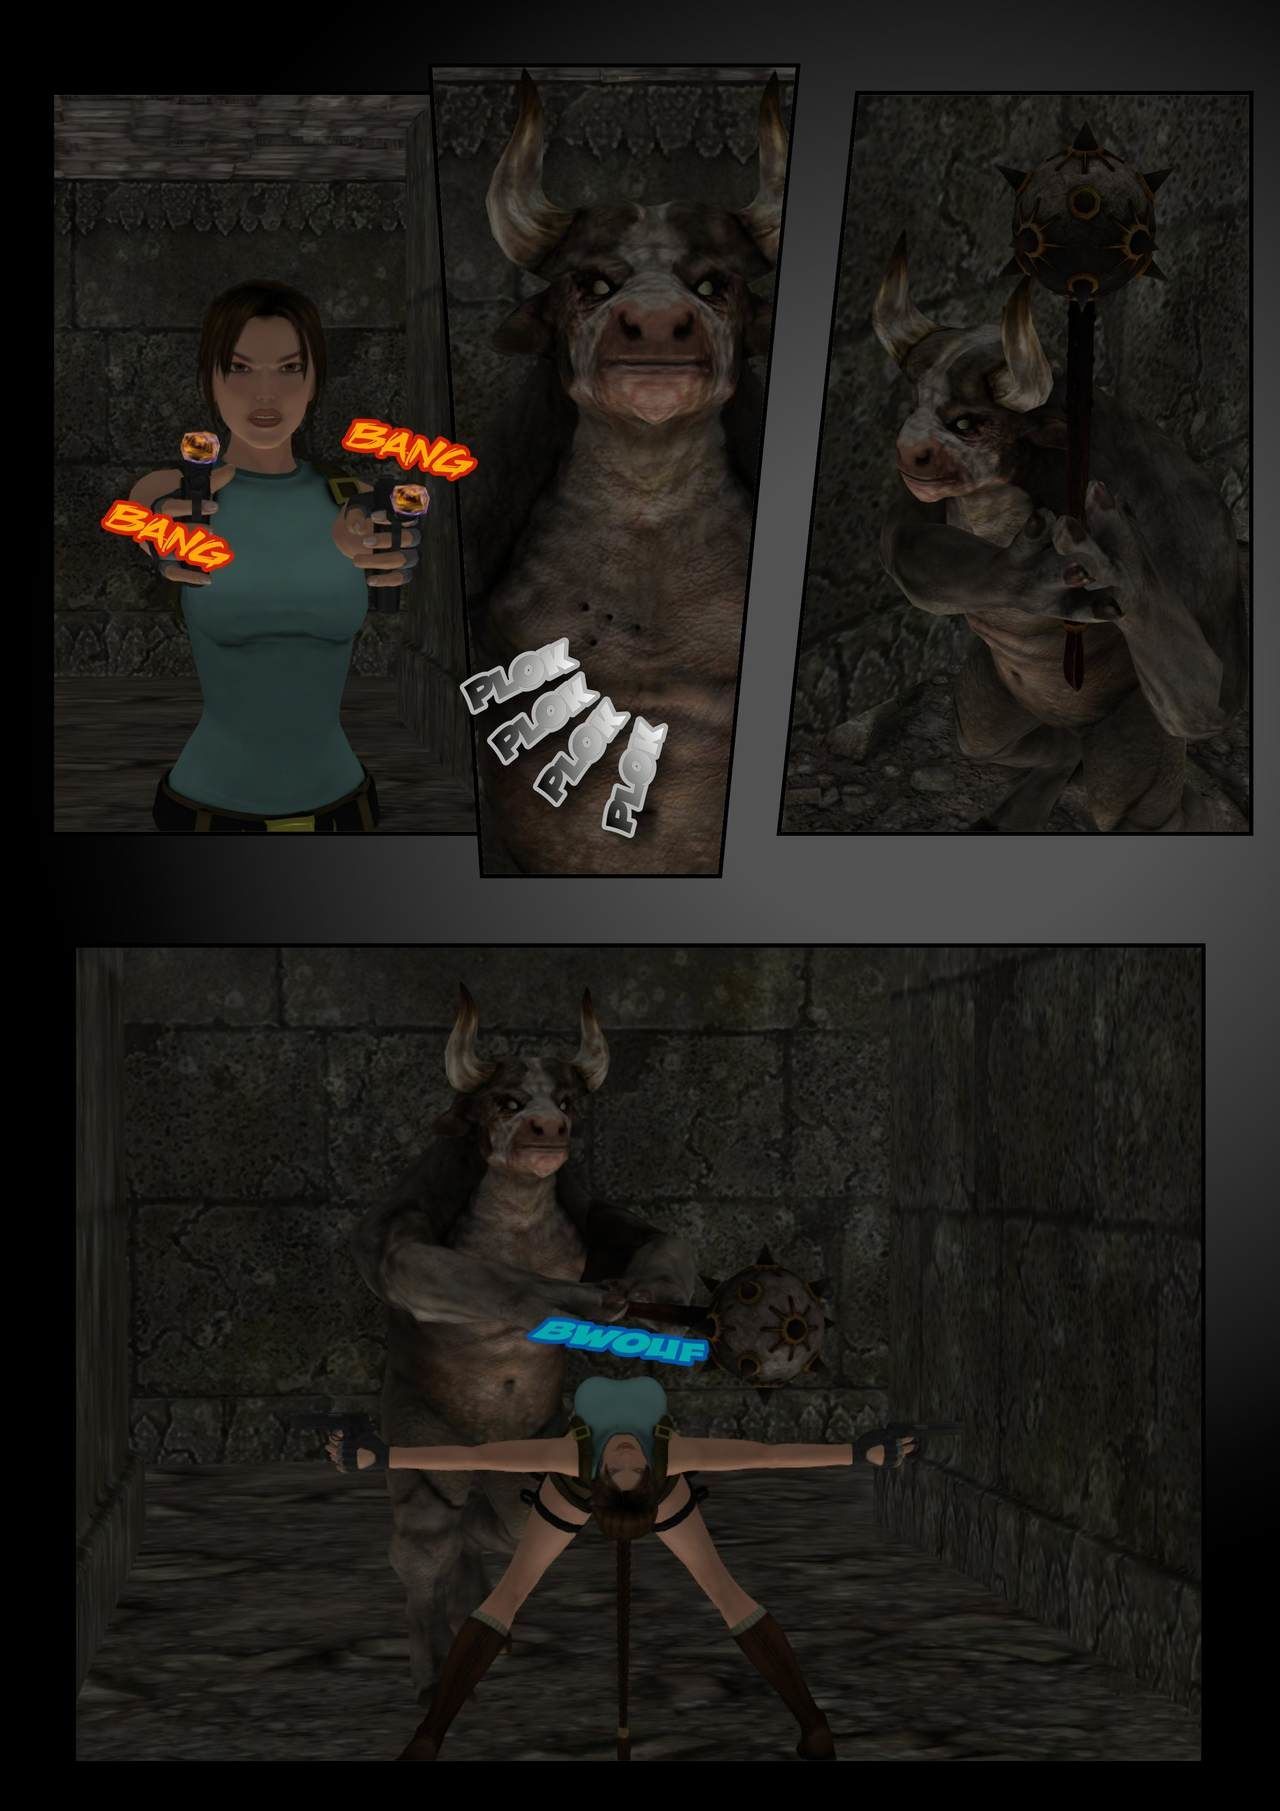 Lara Croft vs o minotaurus w.i.p.